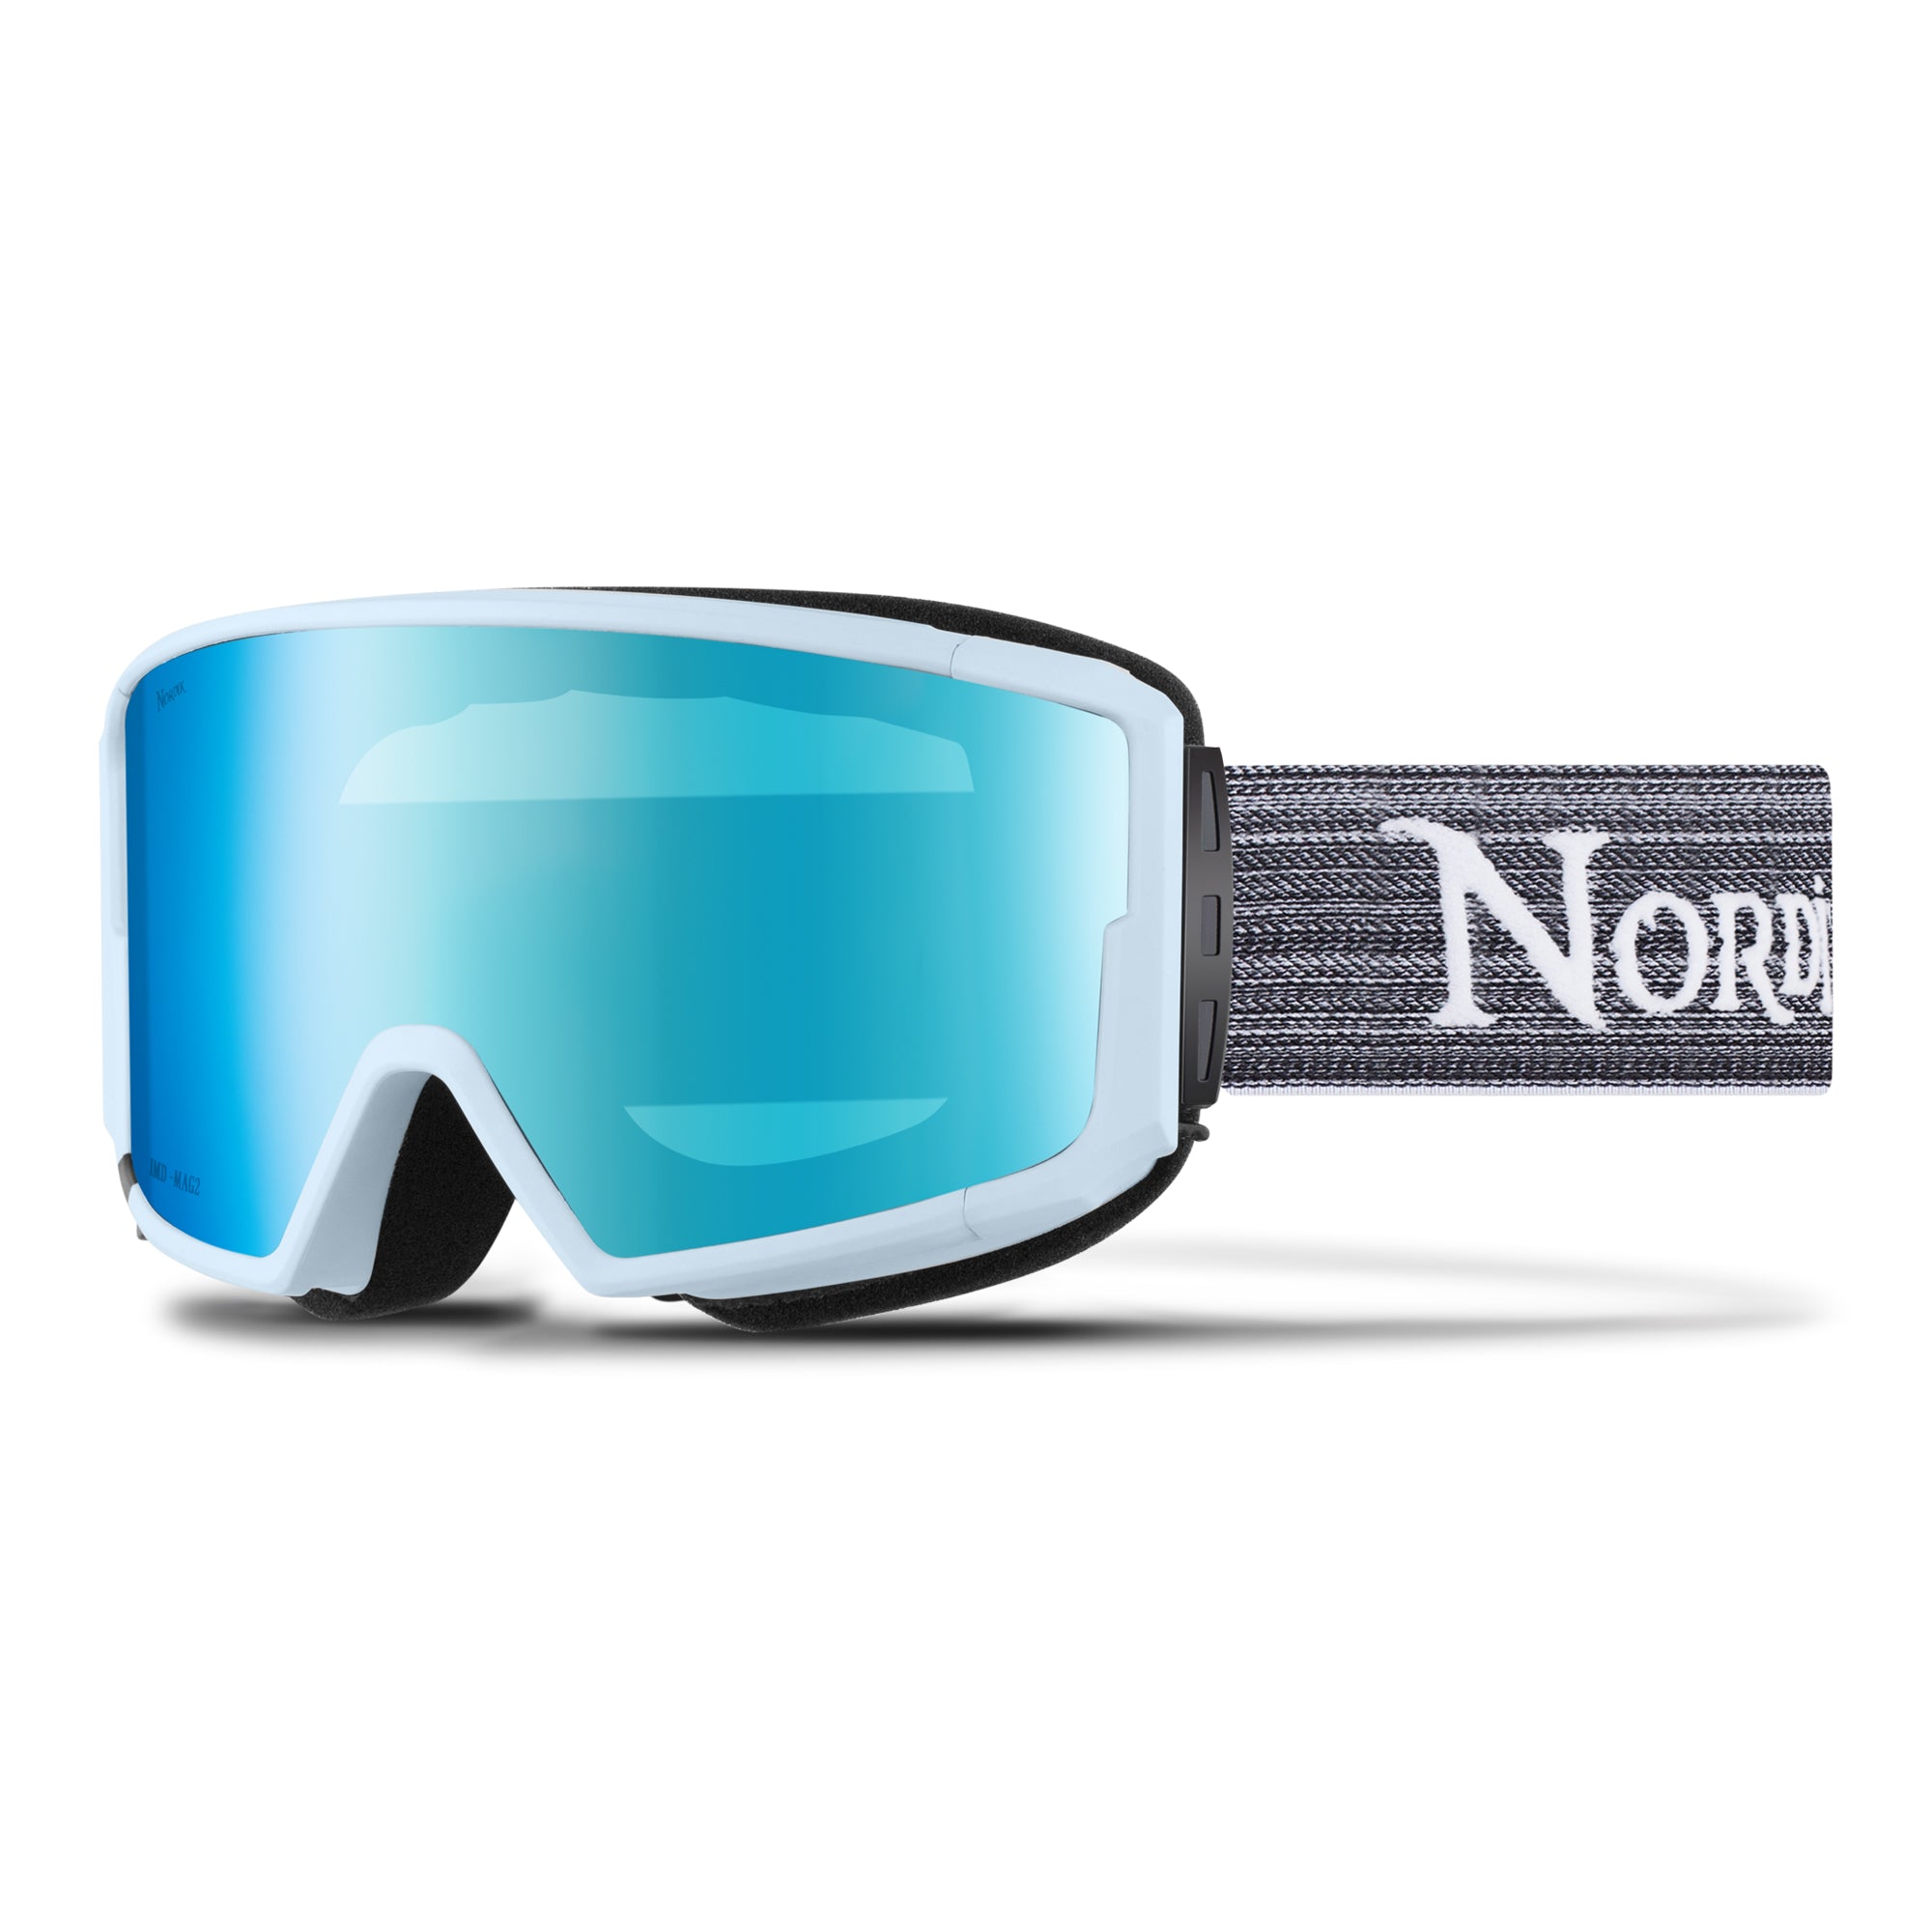 Nordik Eyewear ODIN Ski Goggles + Bonus Lens | Shop Now